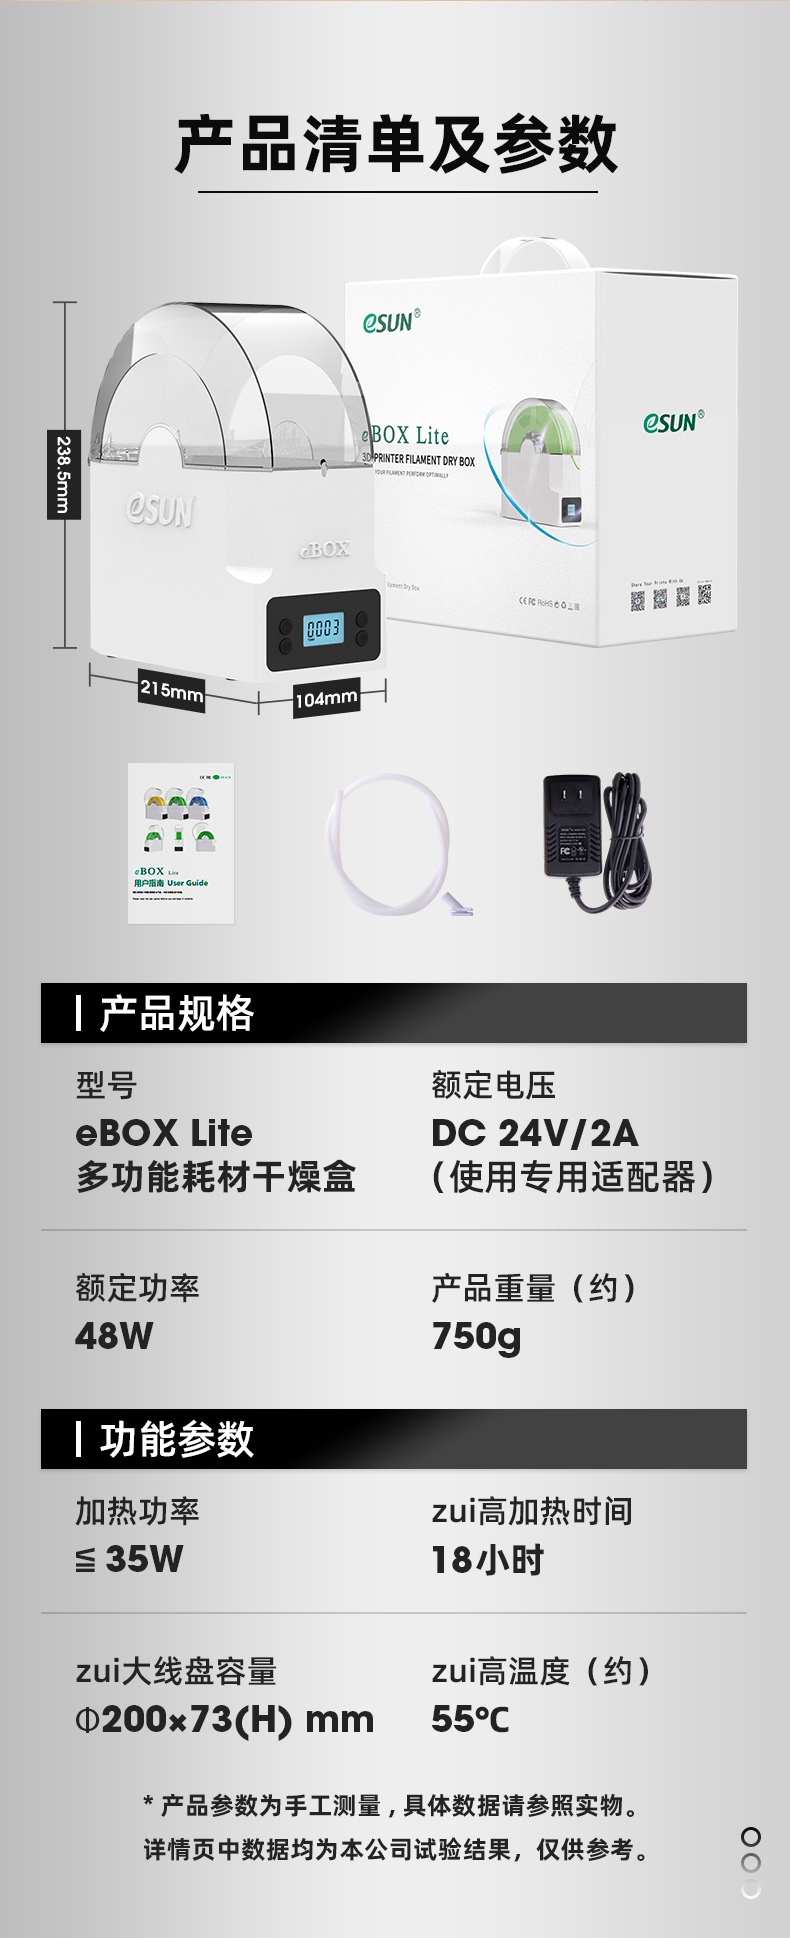 eBOX Lite产品清单及参数